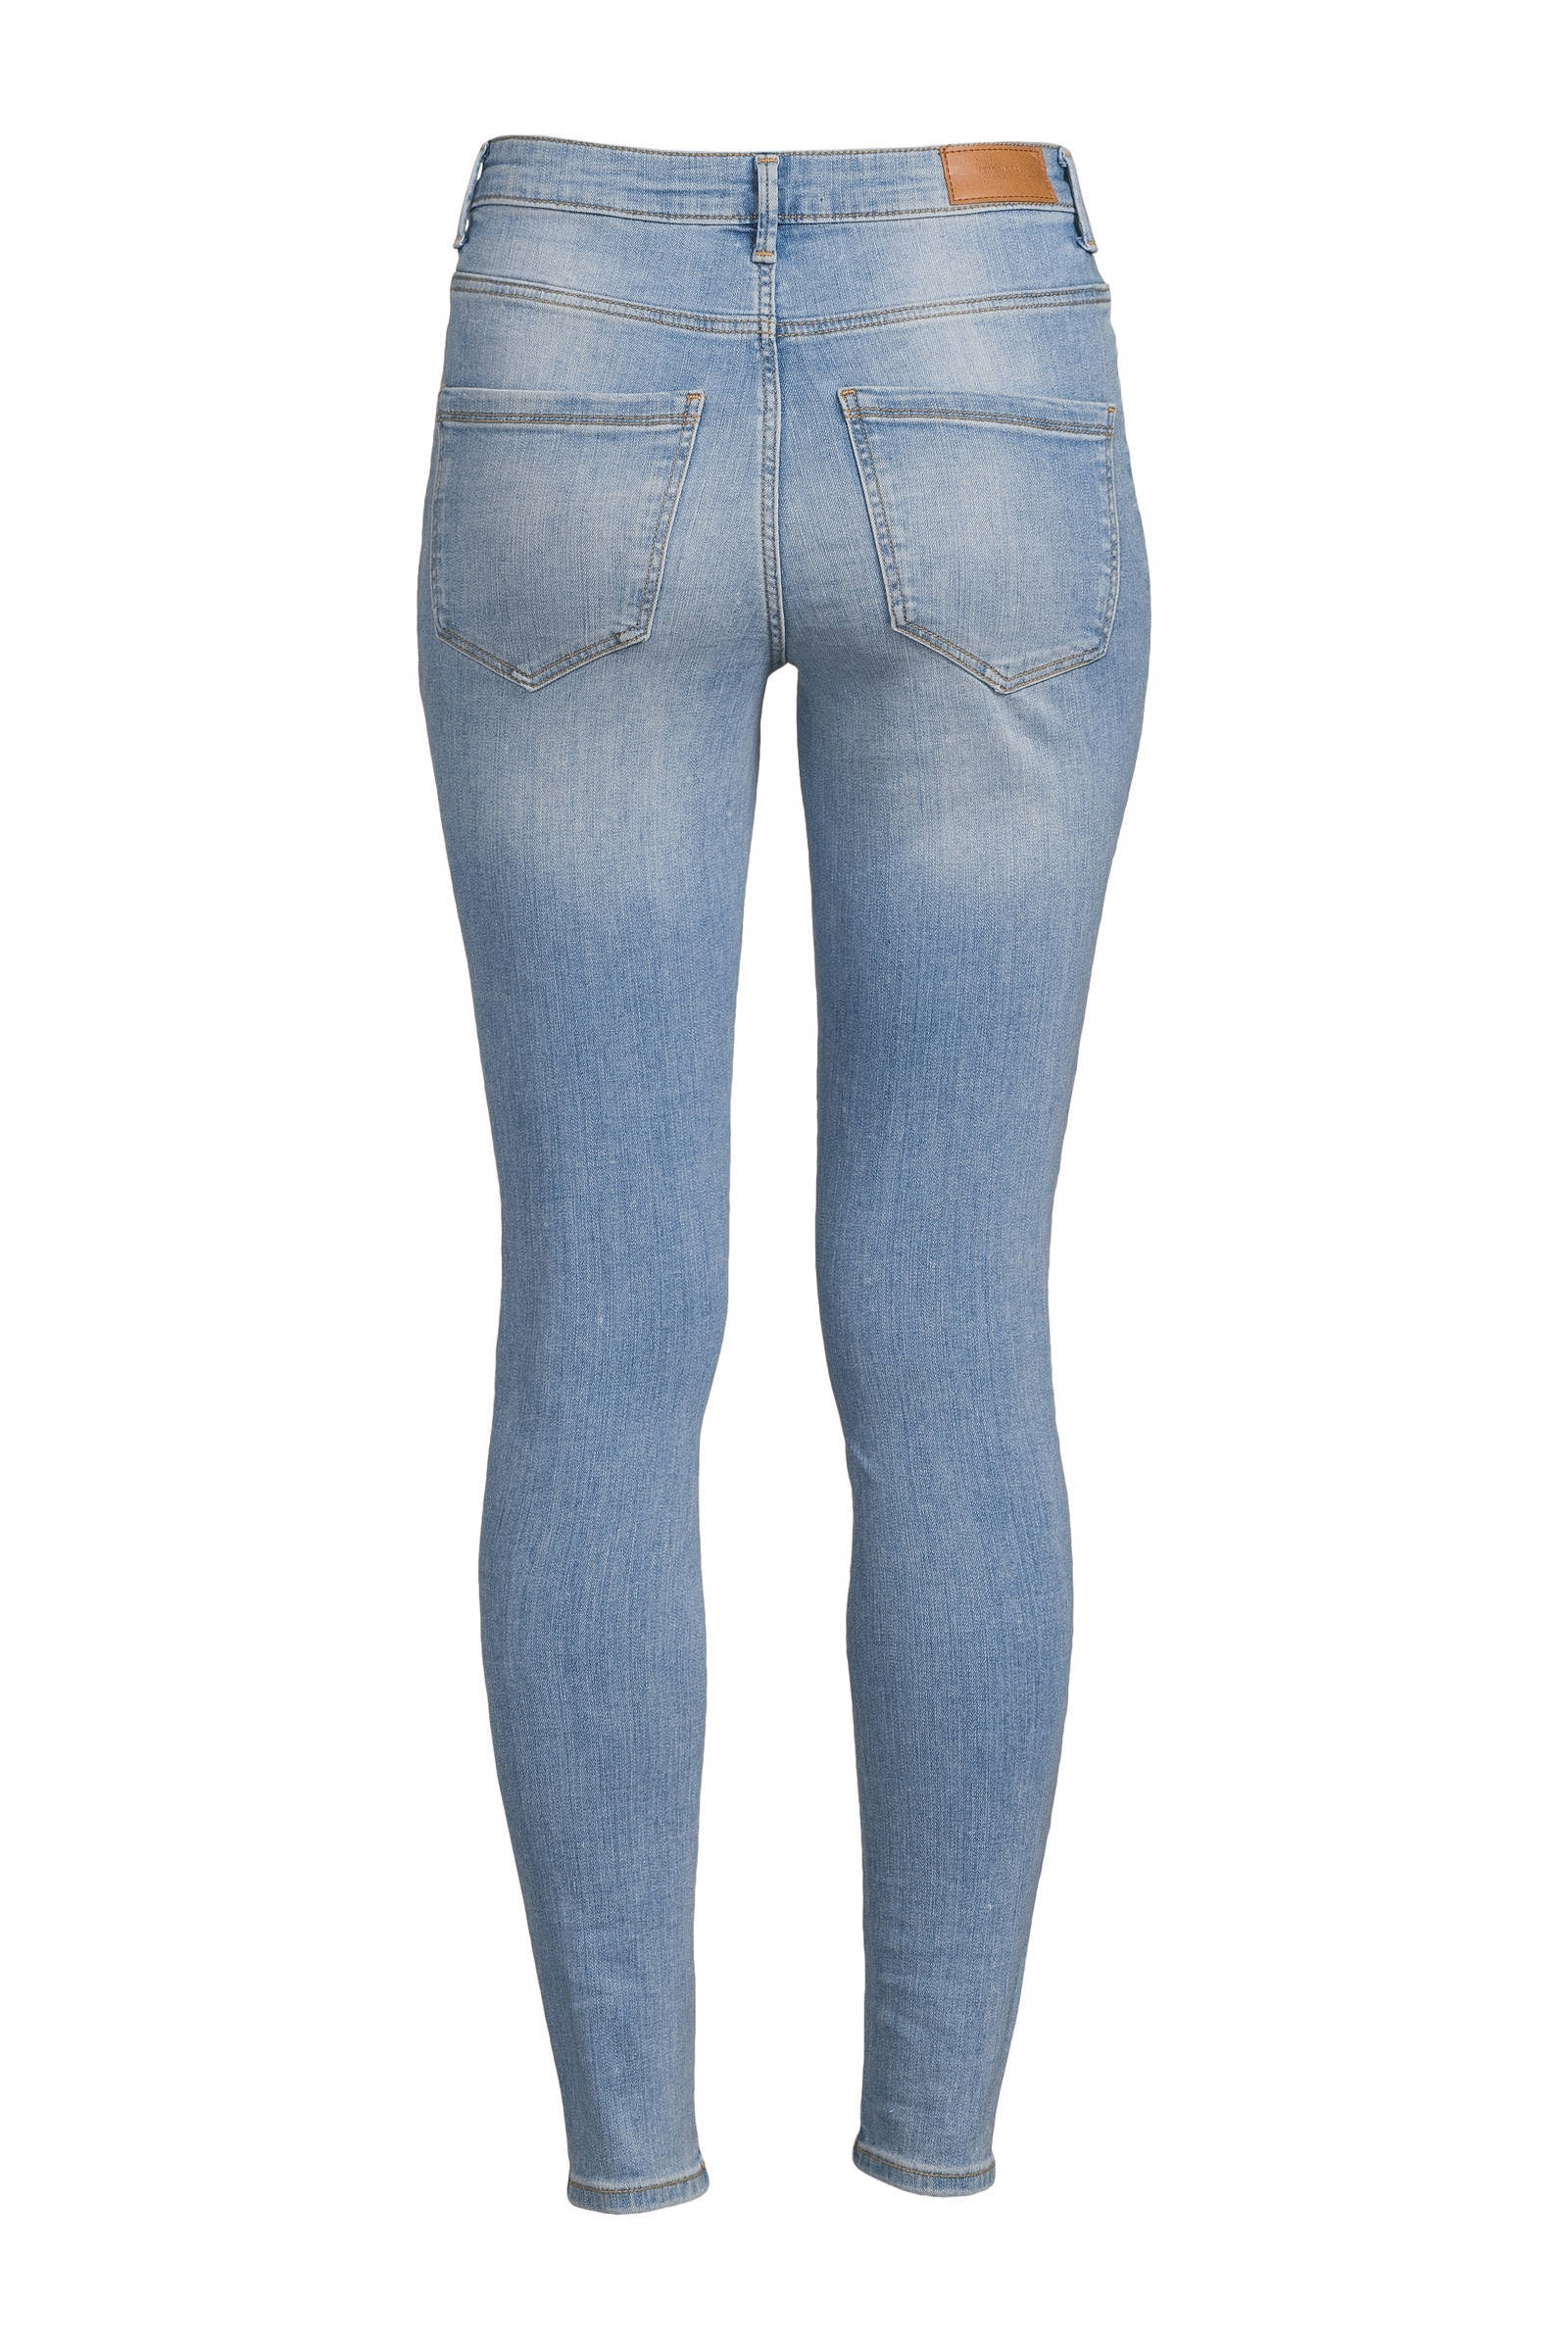 Skinny jeans grijs wehkamp Jongens Kleding Broeken & Jeans Jeans Skinny Jeans 